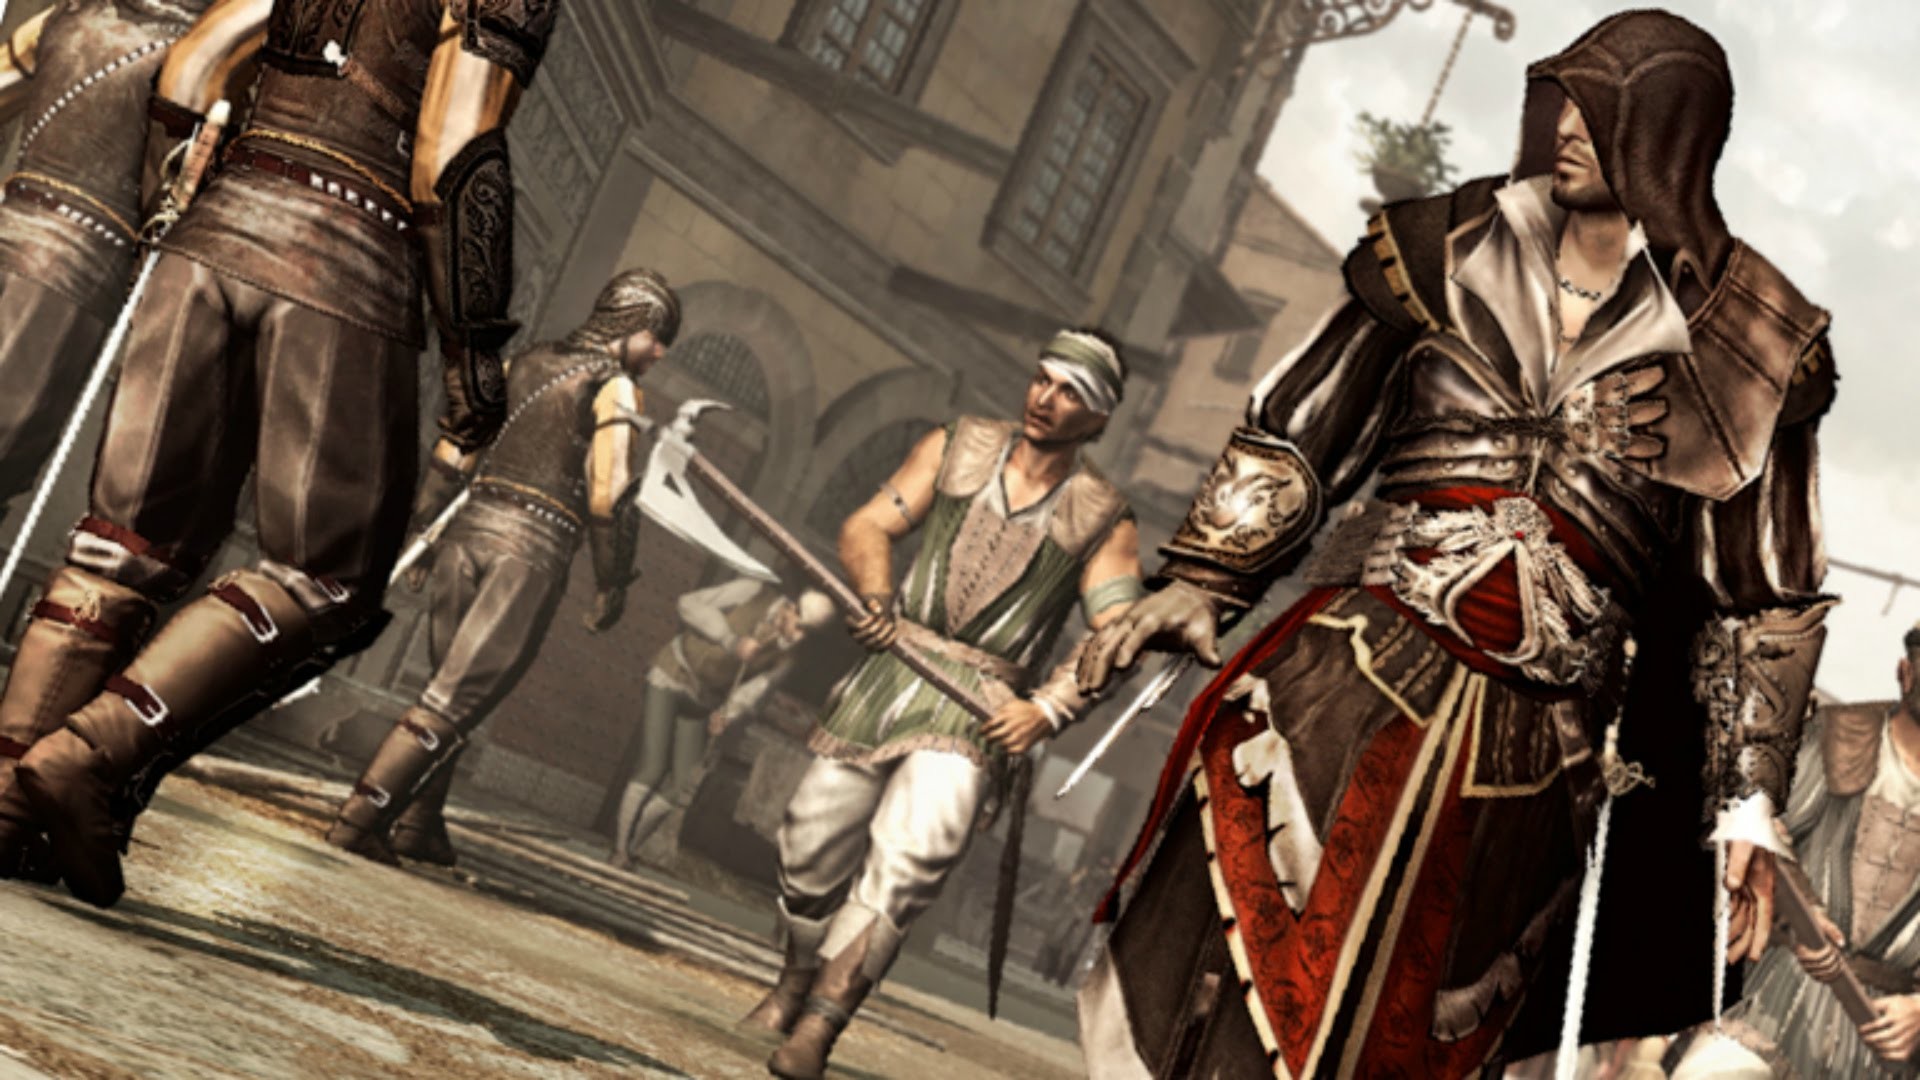 1920x1080 Assassin's Creed 2 Armor of AltaÃ¯r Master Assassin Finishing Moves/Counter  Kills GTX 960 - YouTube